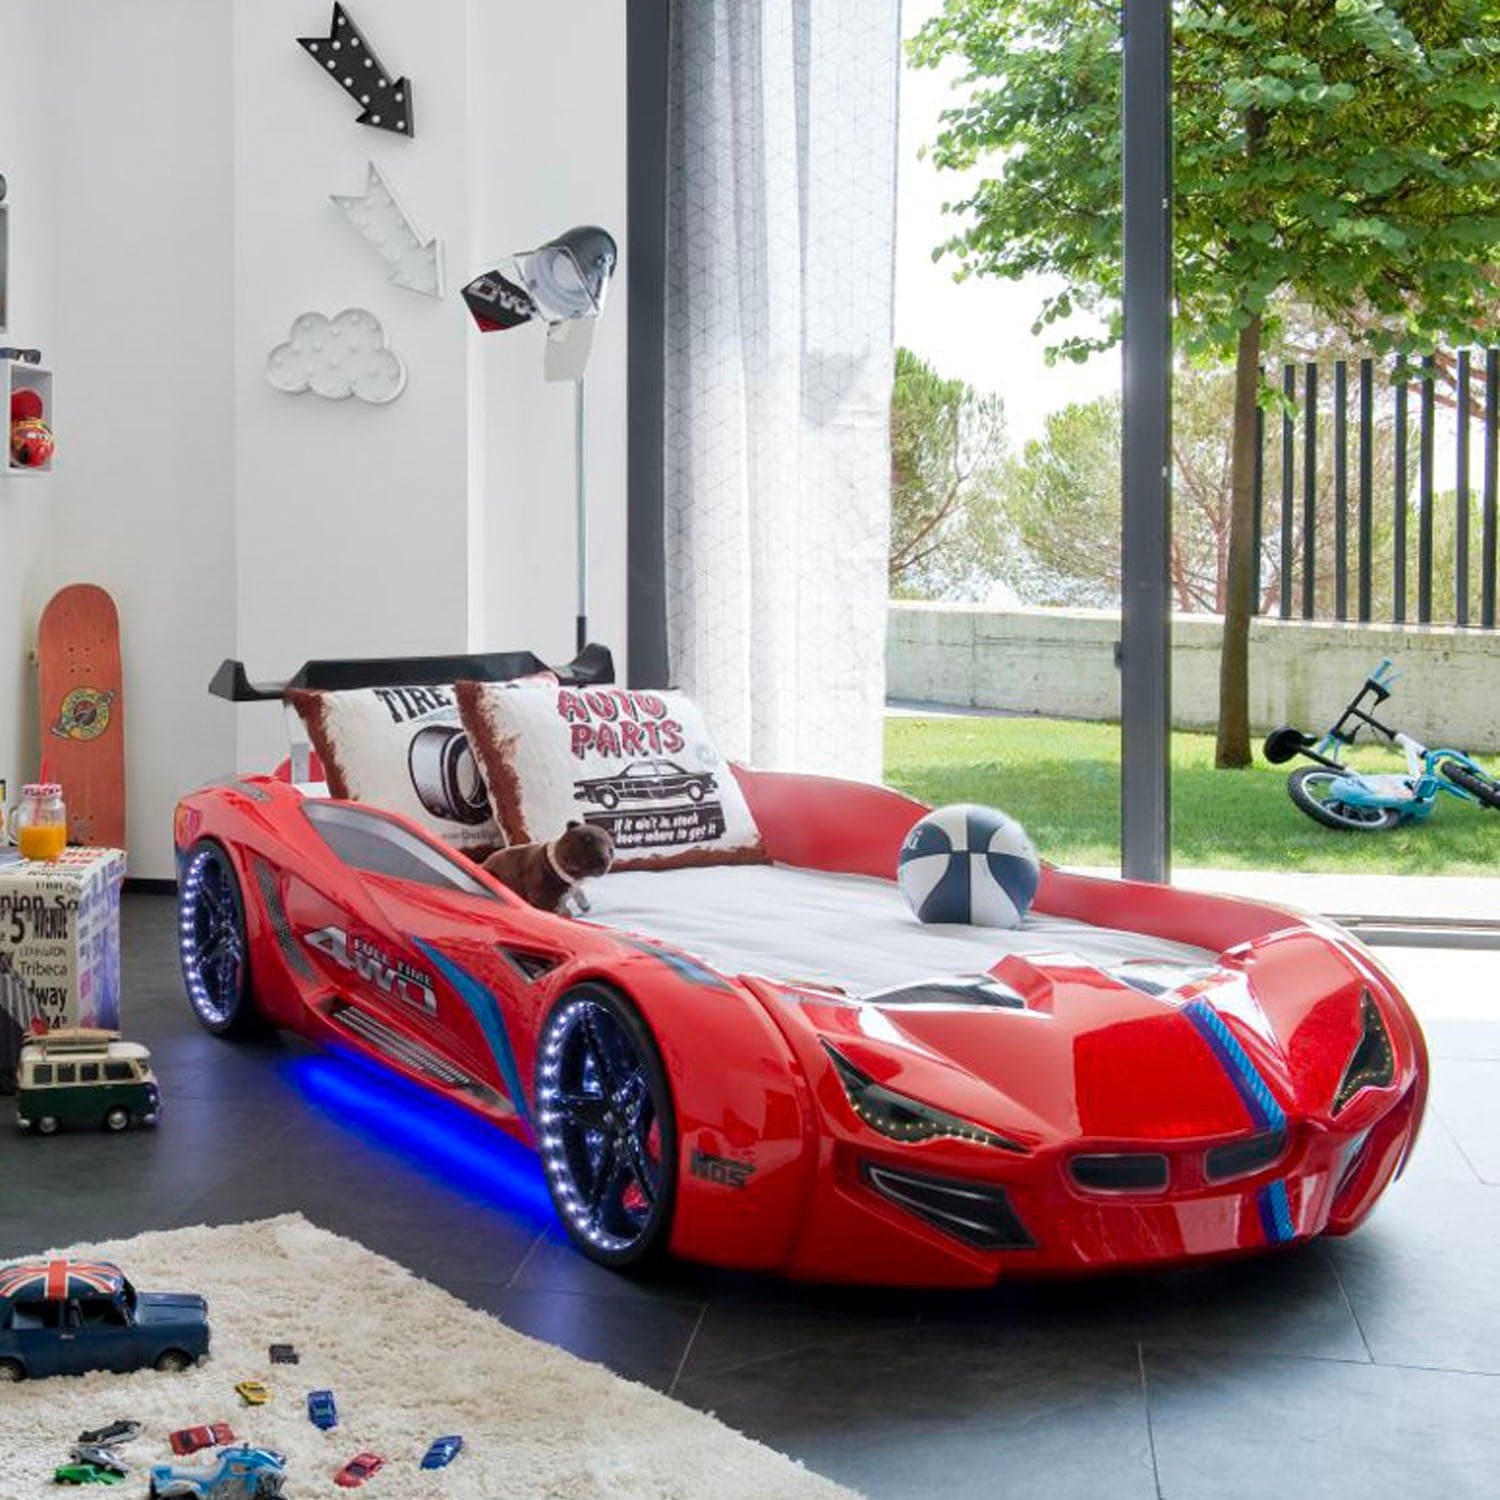 MVN1 FULLTIME Race Car Bed with LED Lights & Sound FX